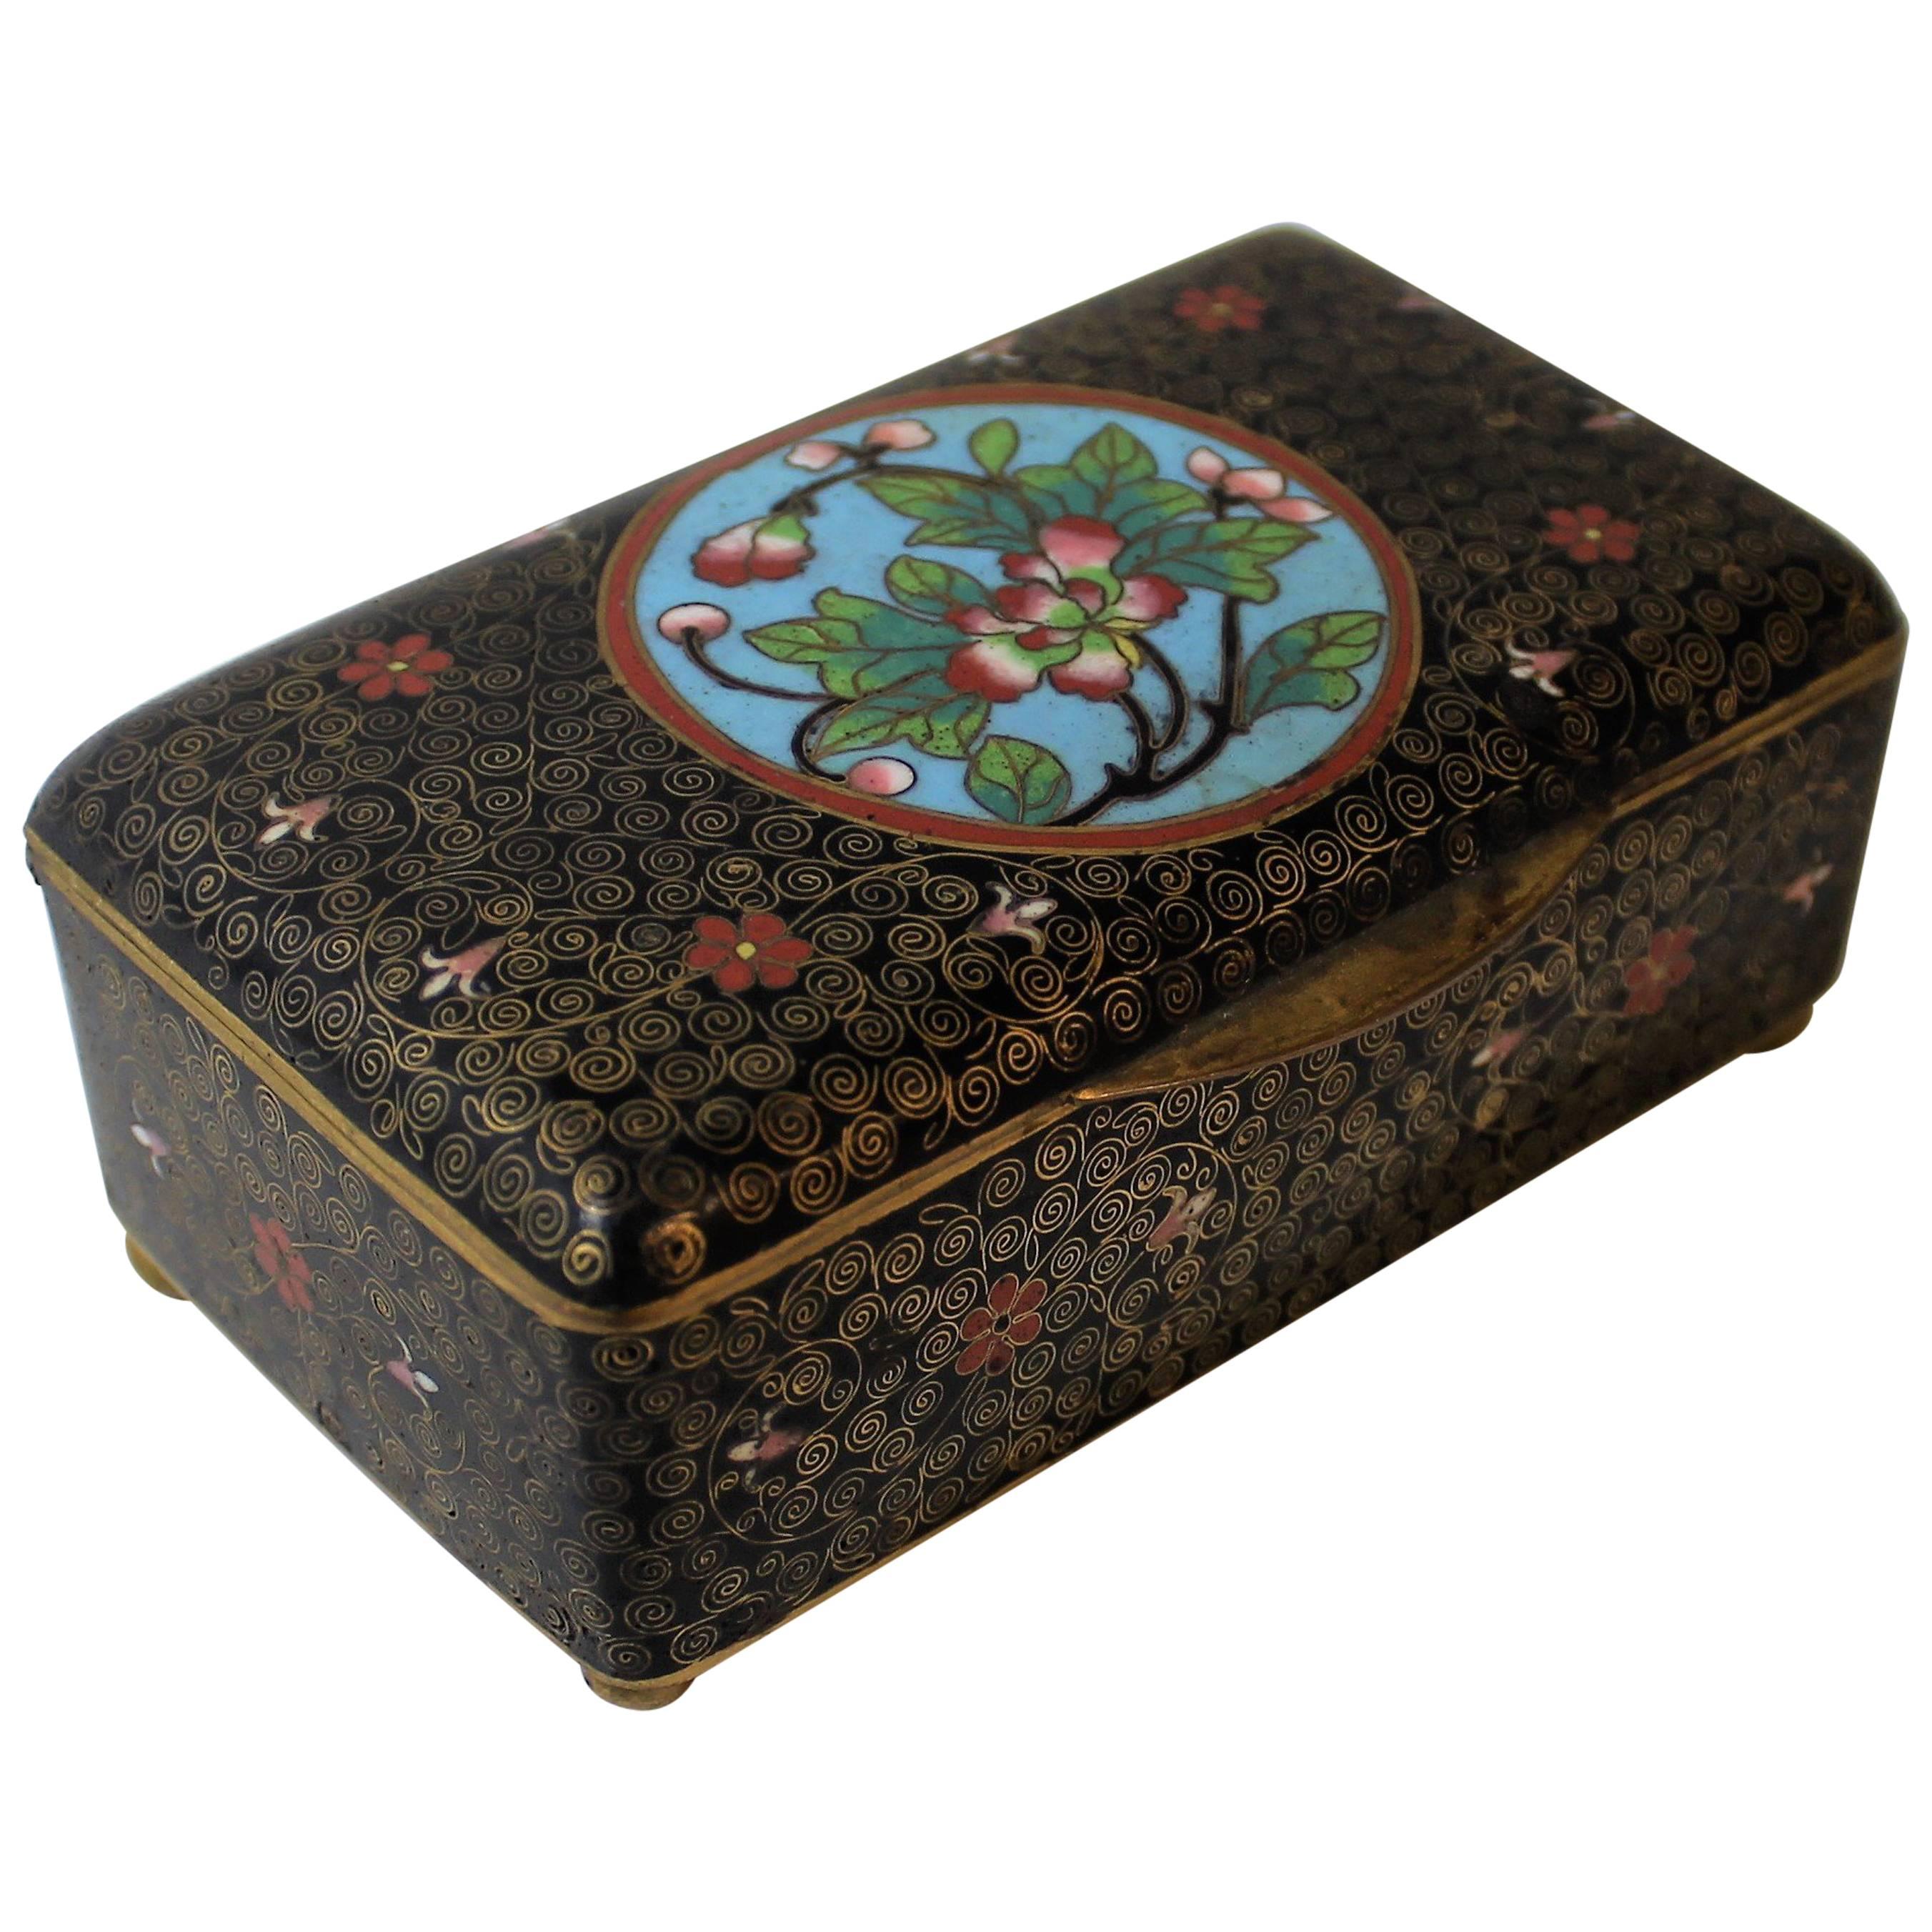 19th Century Chinese Cloisonne Decorative Box